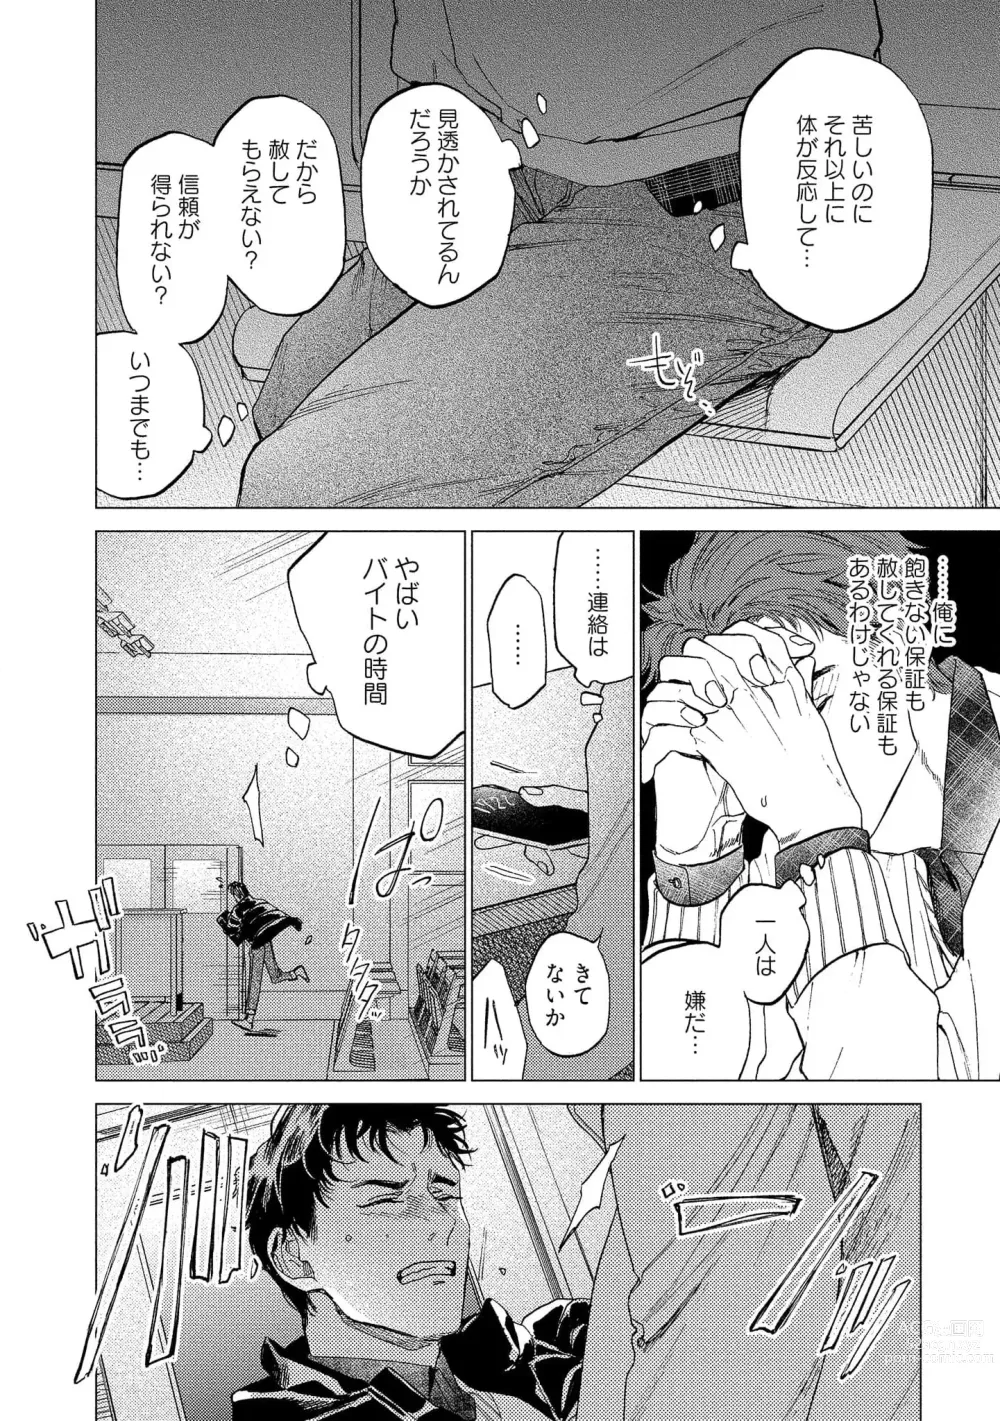 Page 148 of manga Fukushuu ga Tokenai